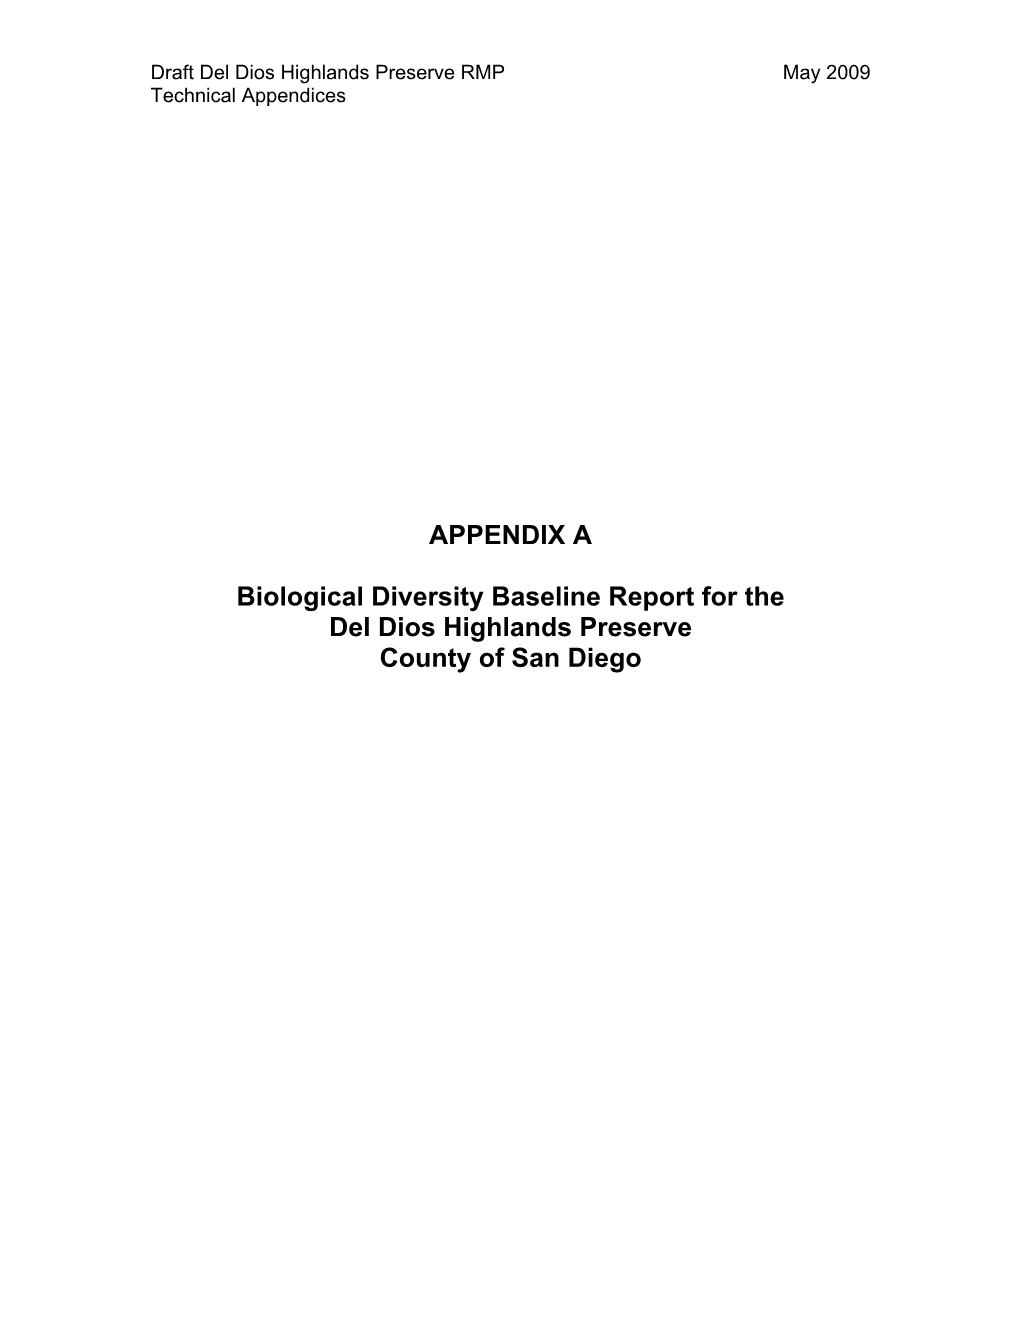 APPENDIX a Biological Diversity Baseline Report for the Del Dios